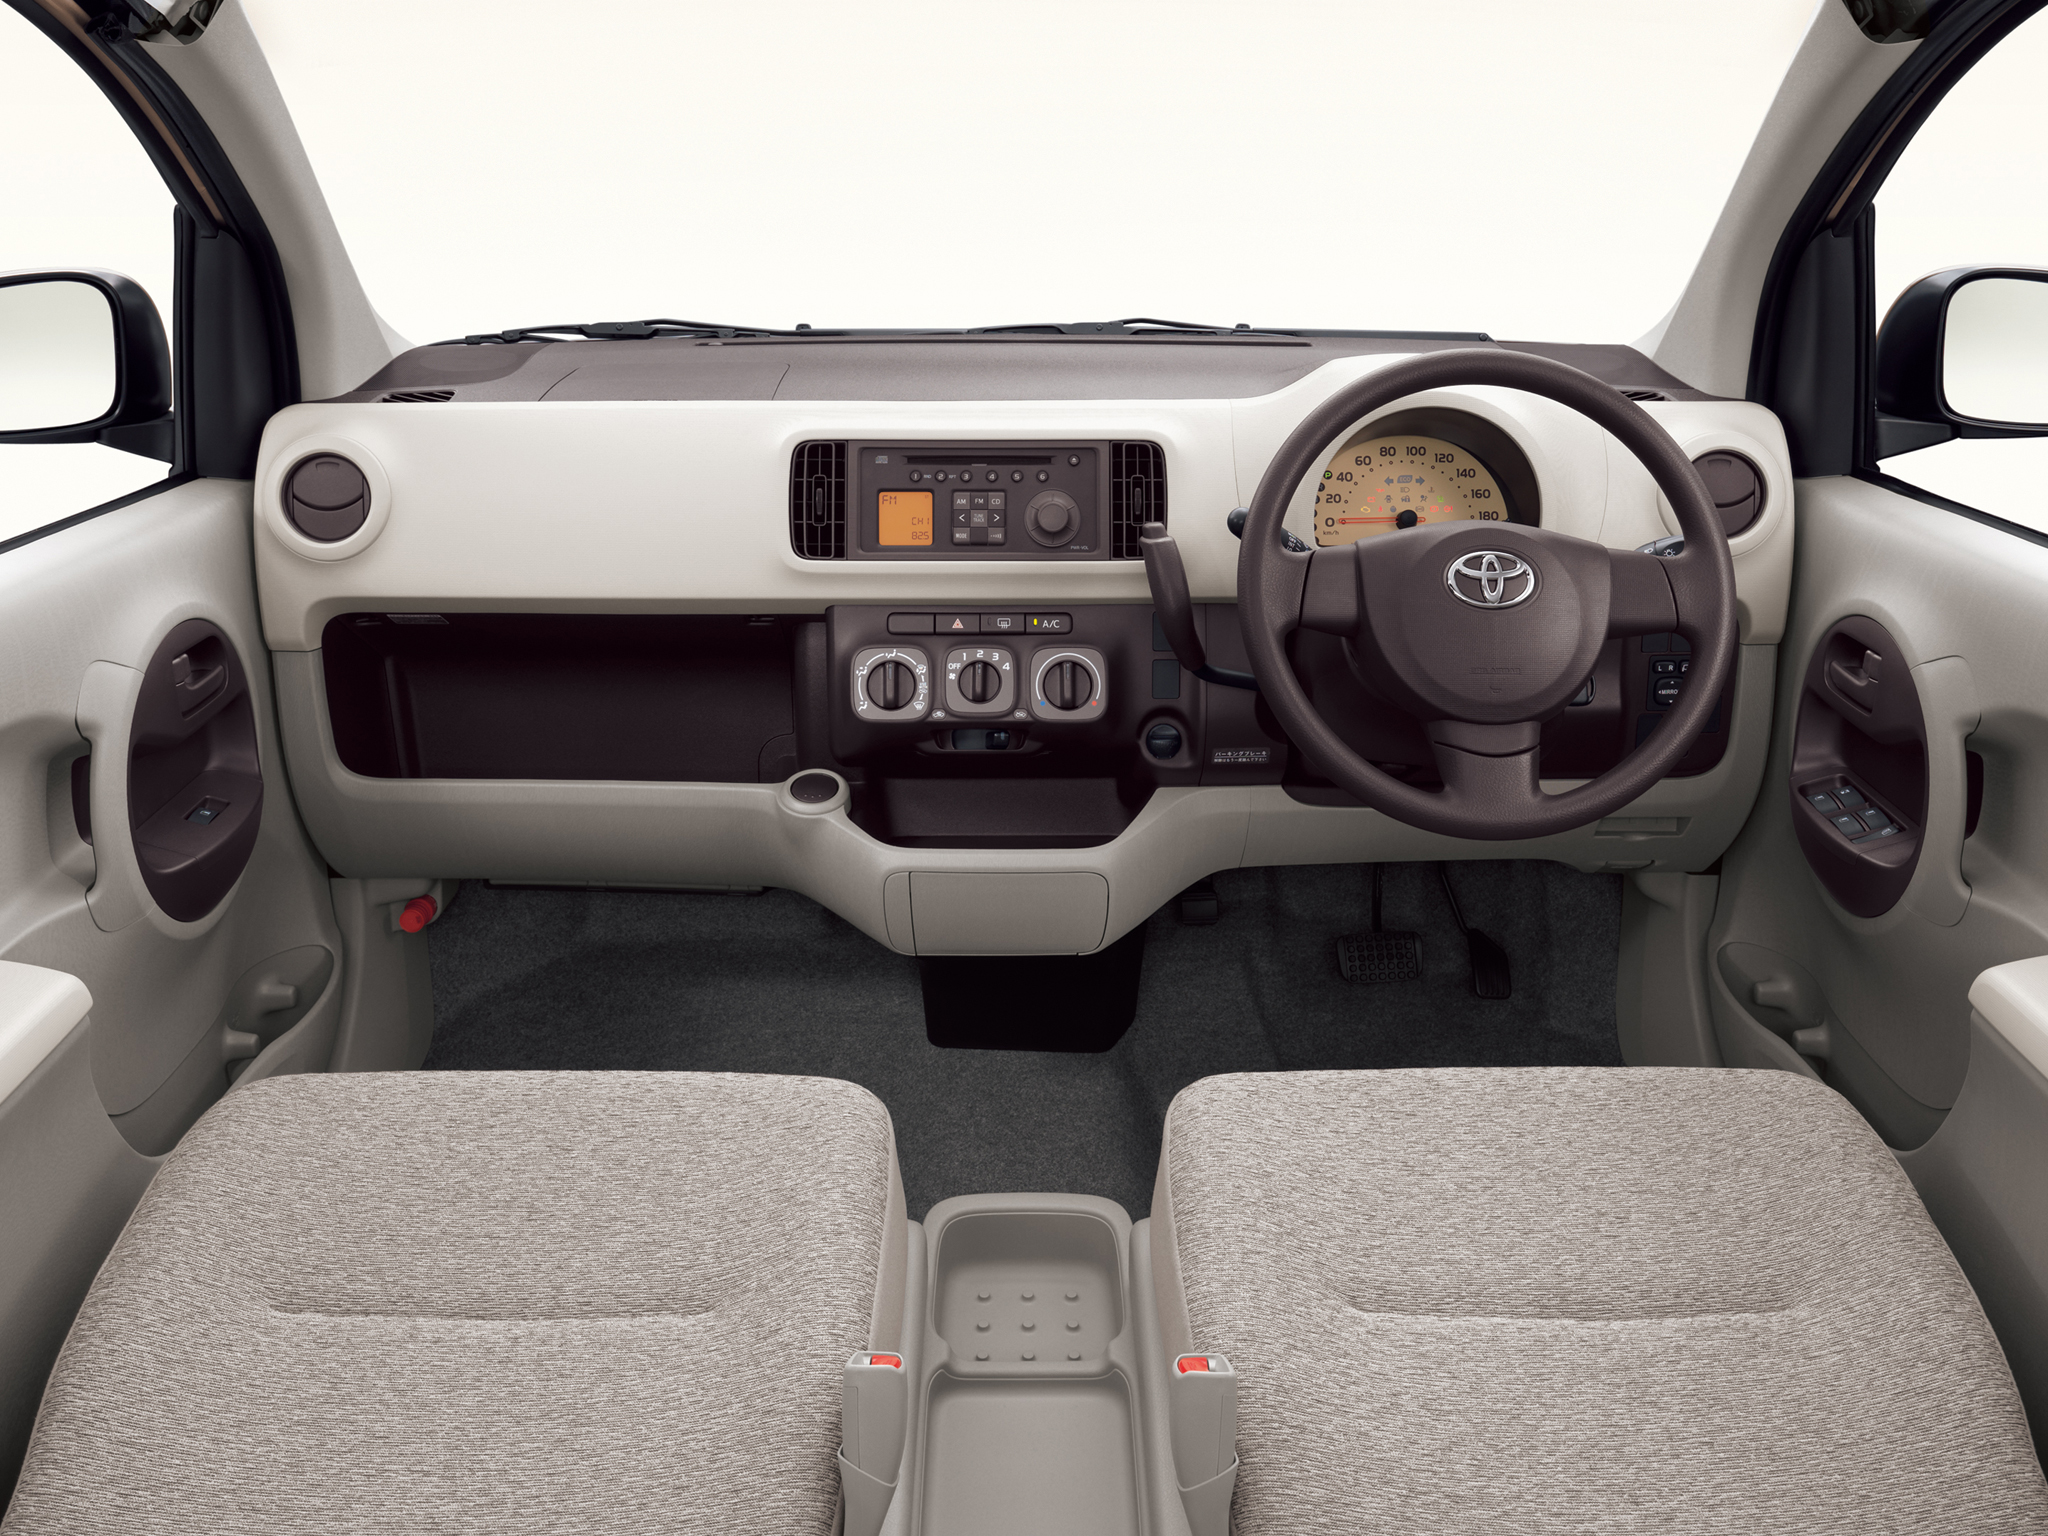 Toyota Passo 2nd Generation Interior Dashboard